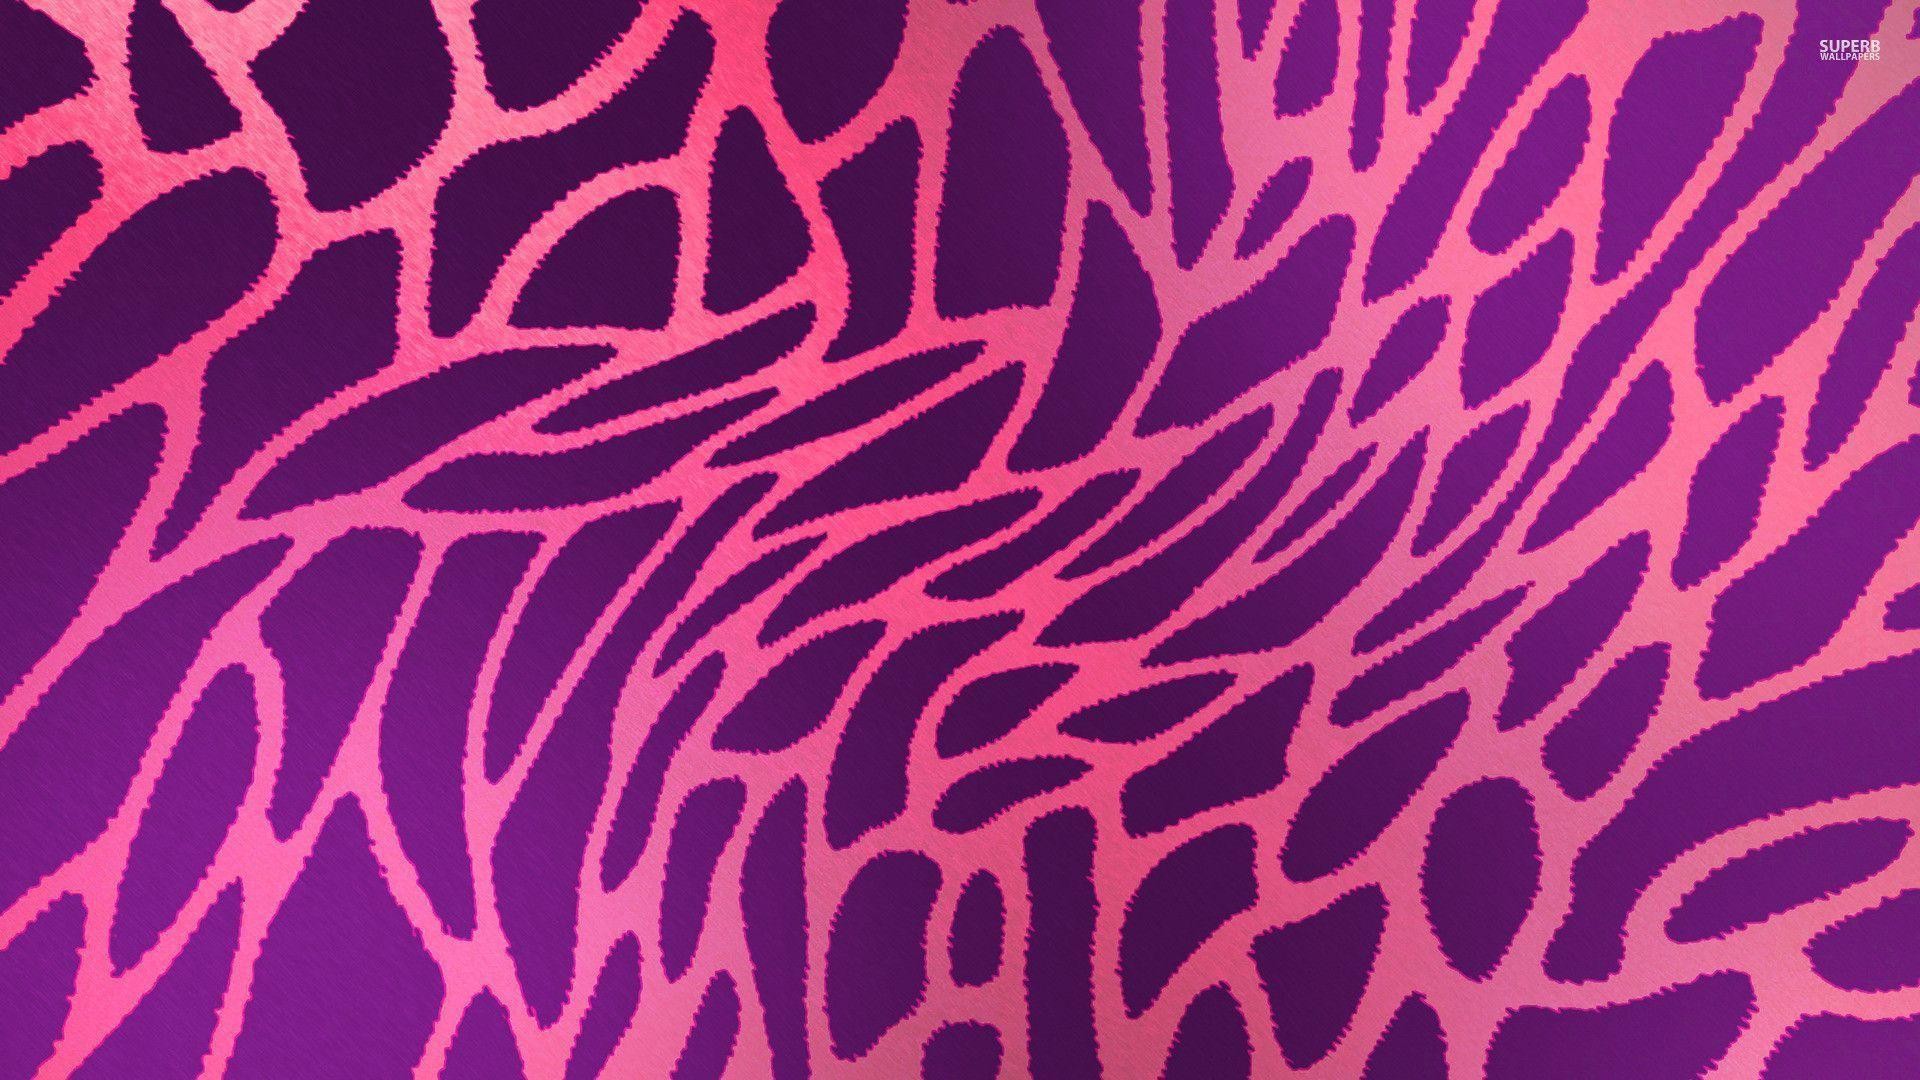 1920x1080 Pink and purple leopard fur wallpaper - Digital Art wallpapers - #